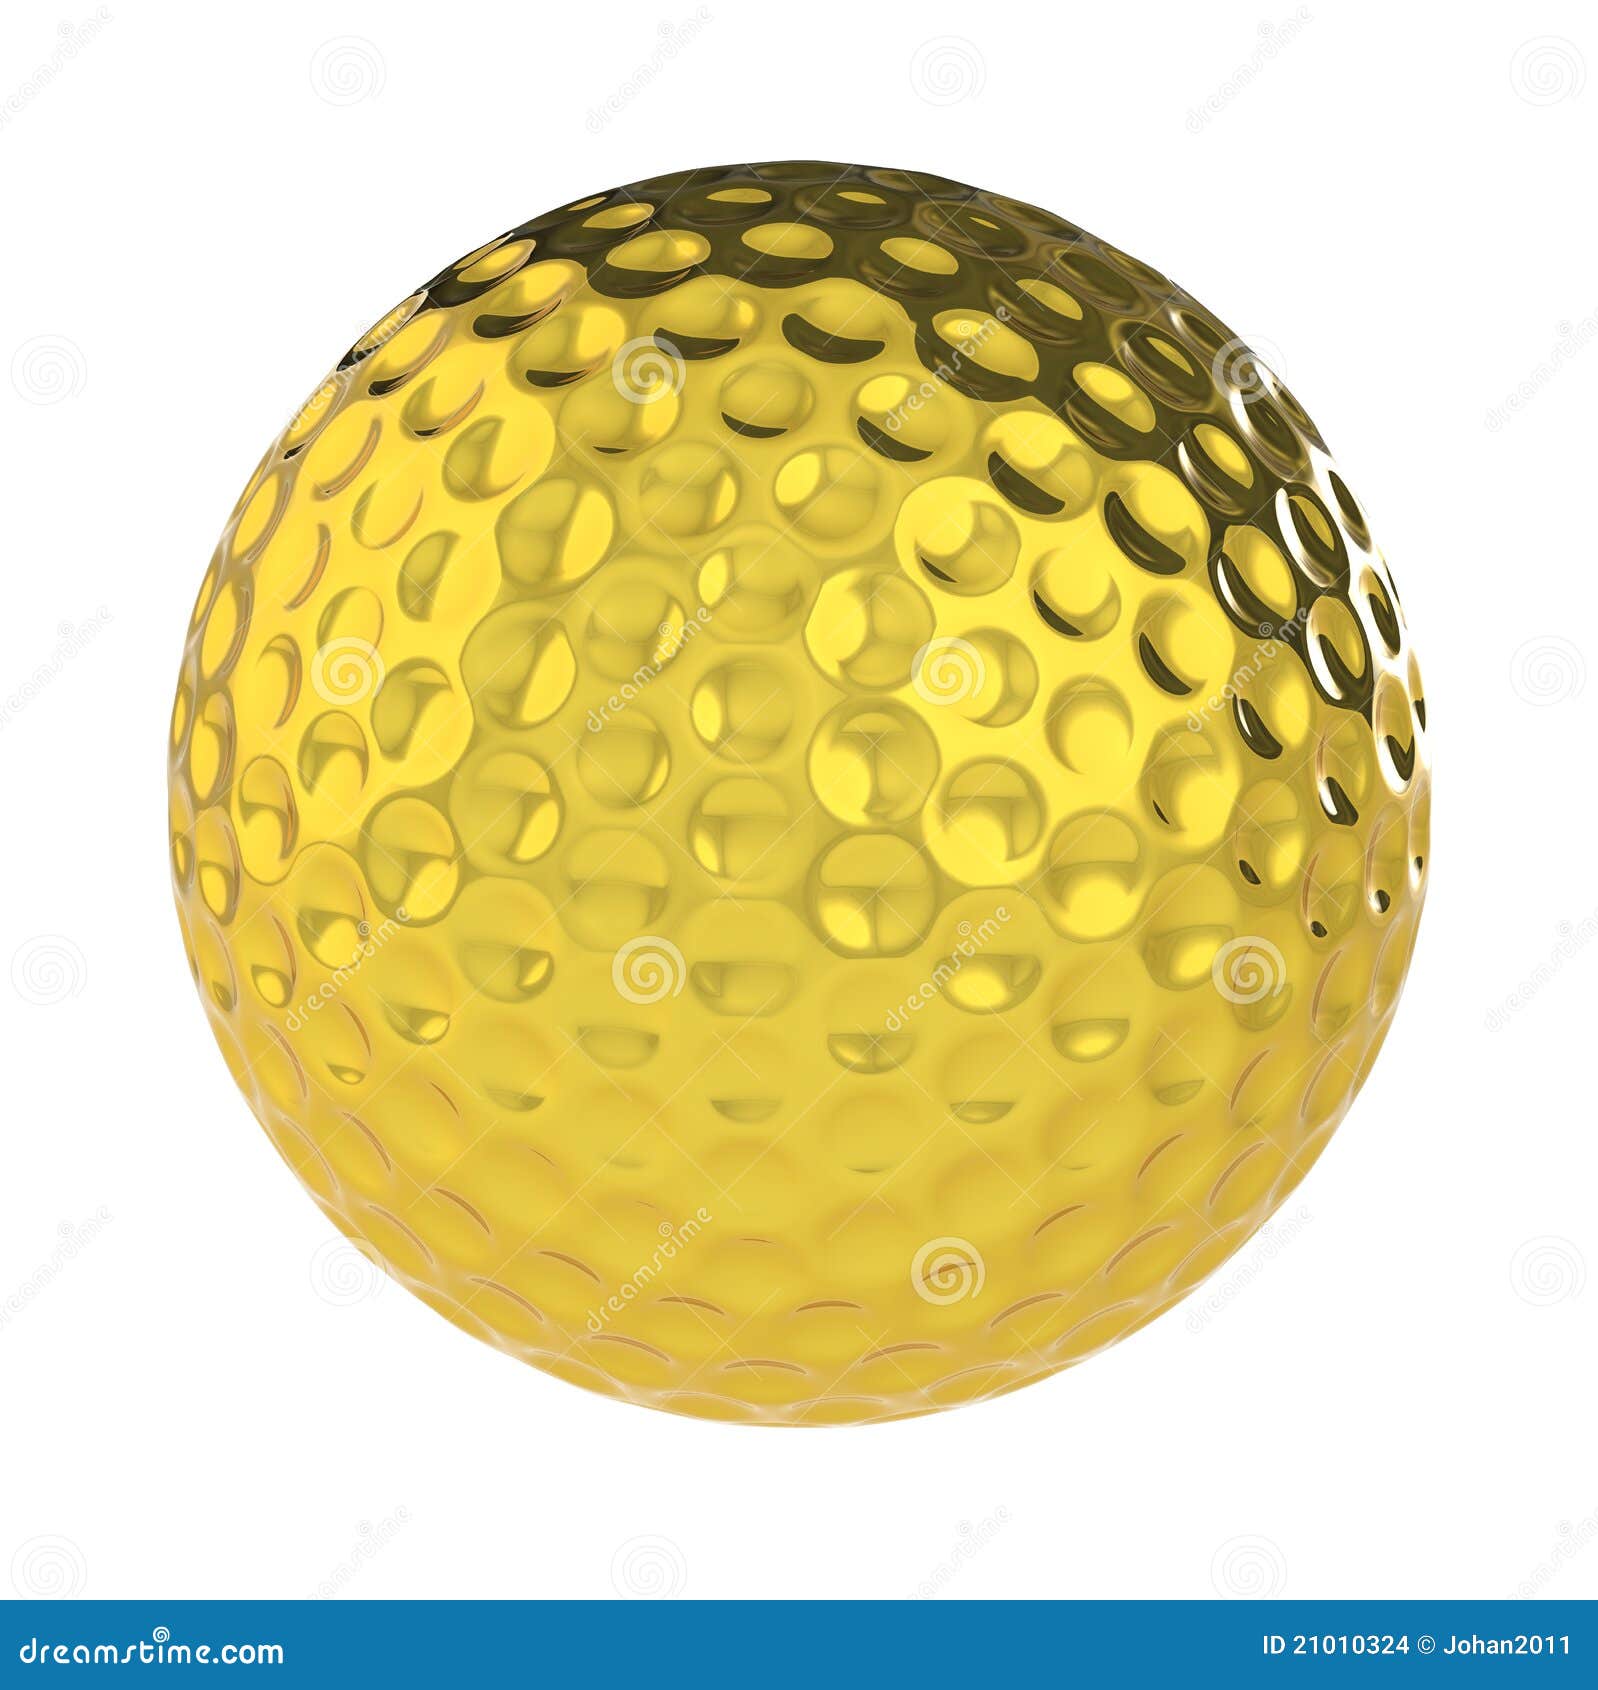 Golden Golf Ball stock illustration. Illustration of golf - 21010324